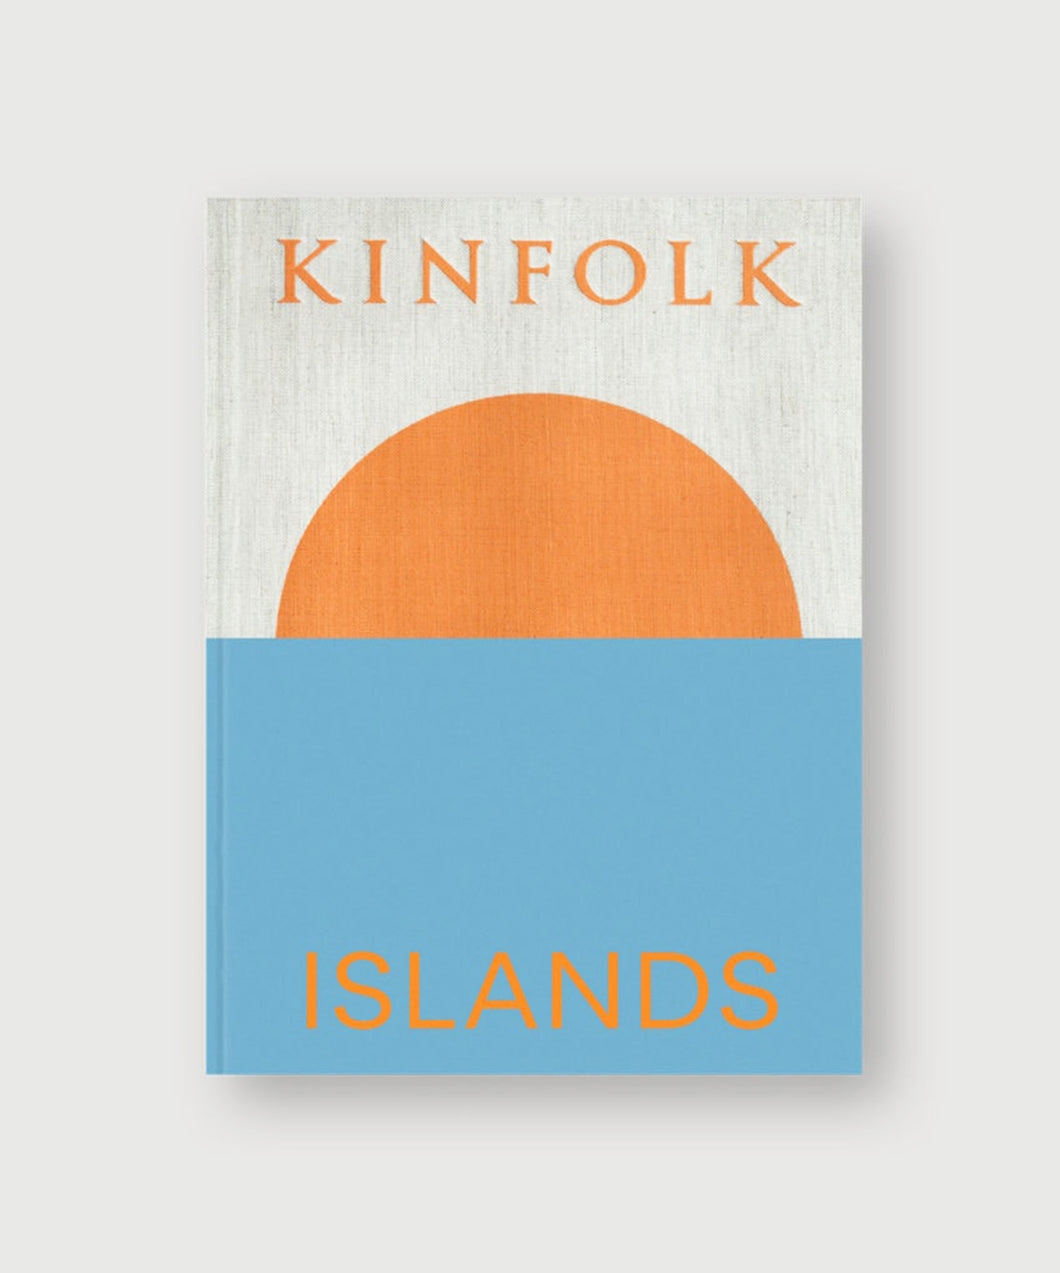 the kinfolk islands